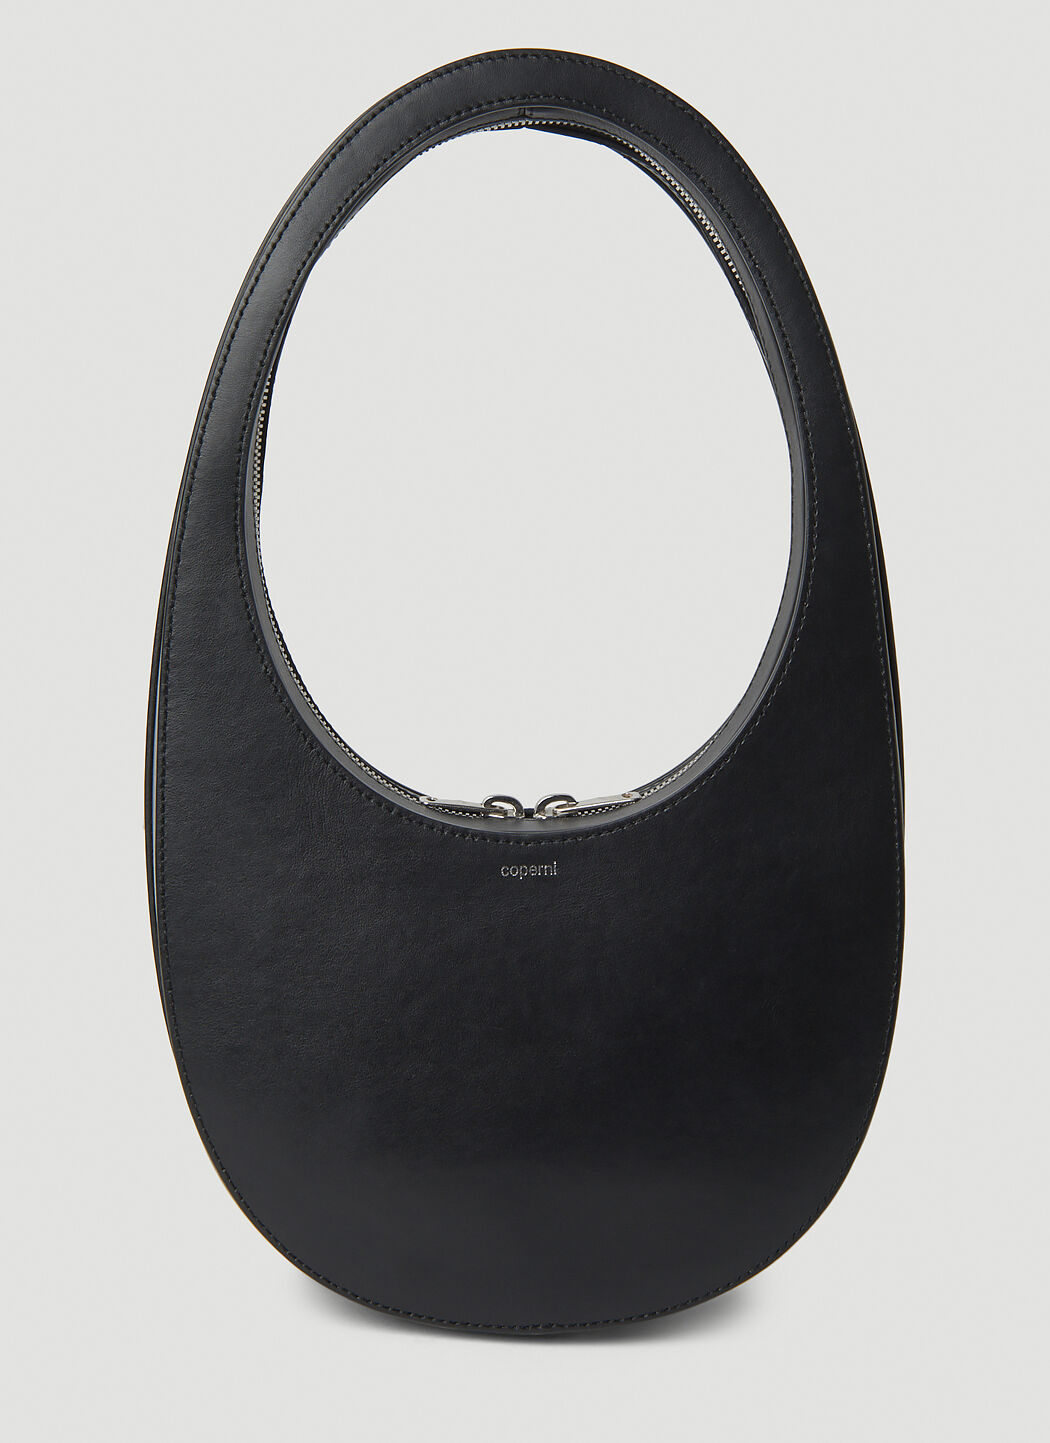 Maisie Williams and Coperni Design Vegan Bag Made From Apple Waste